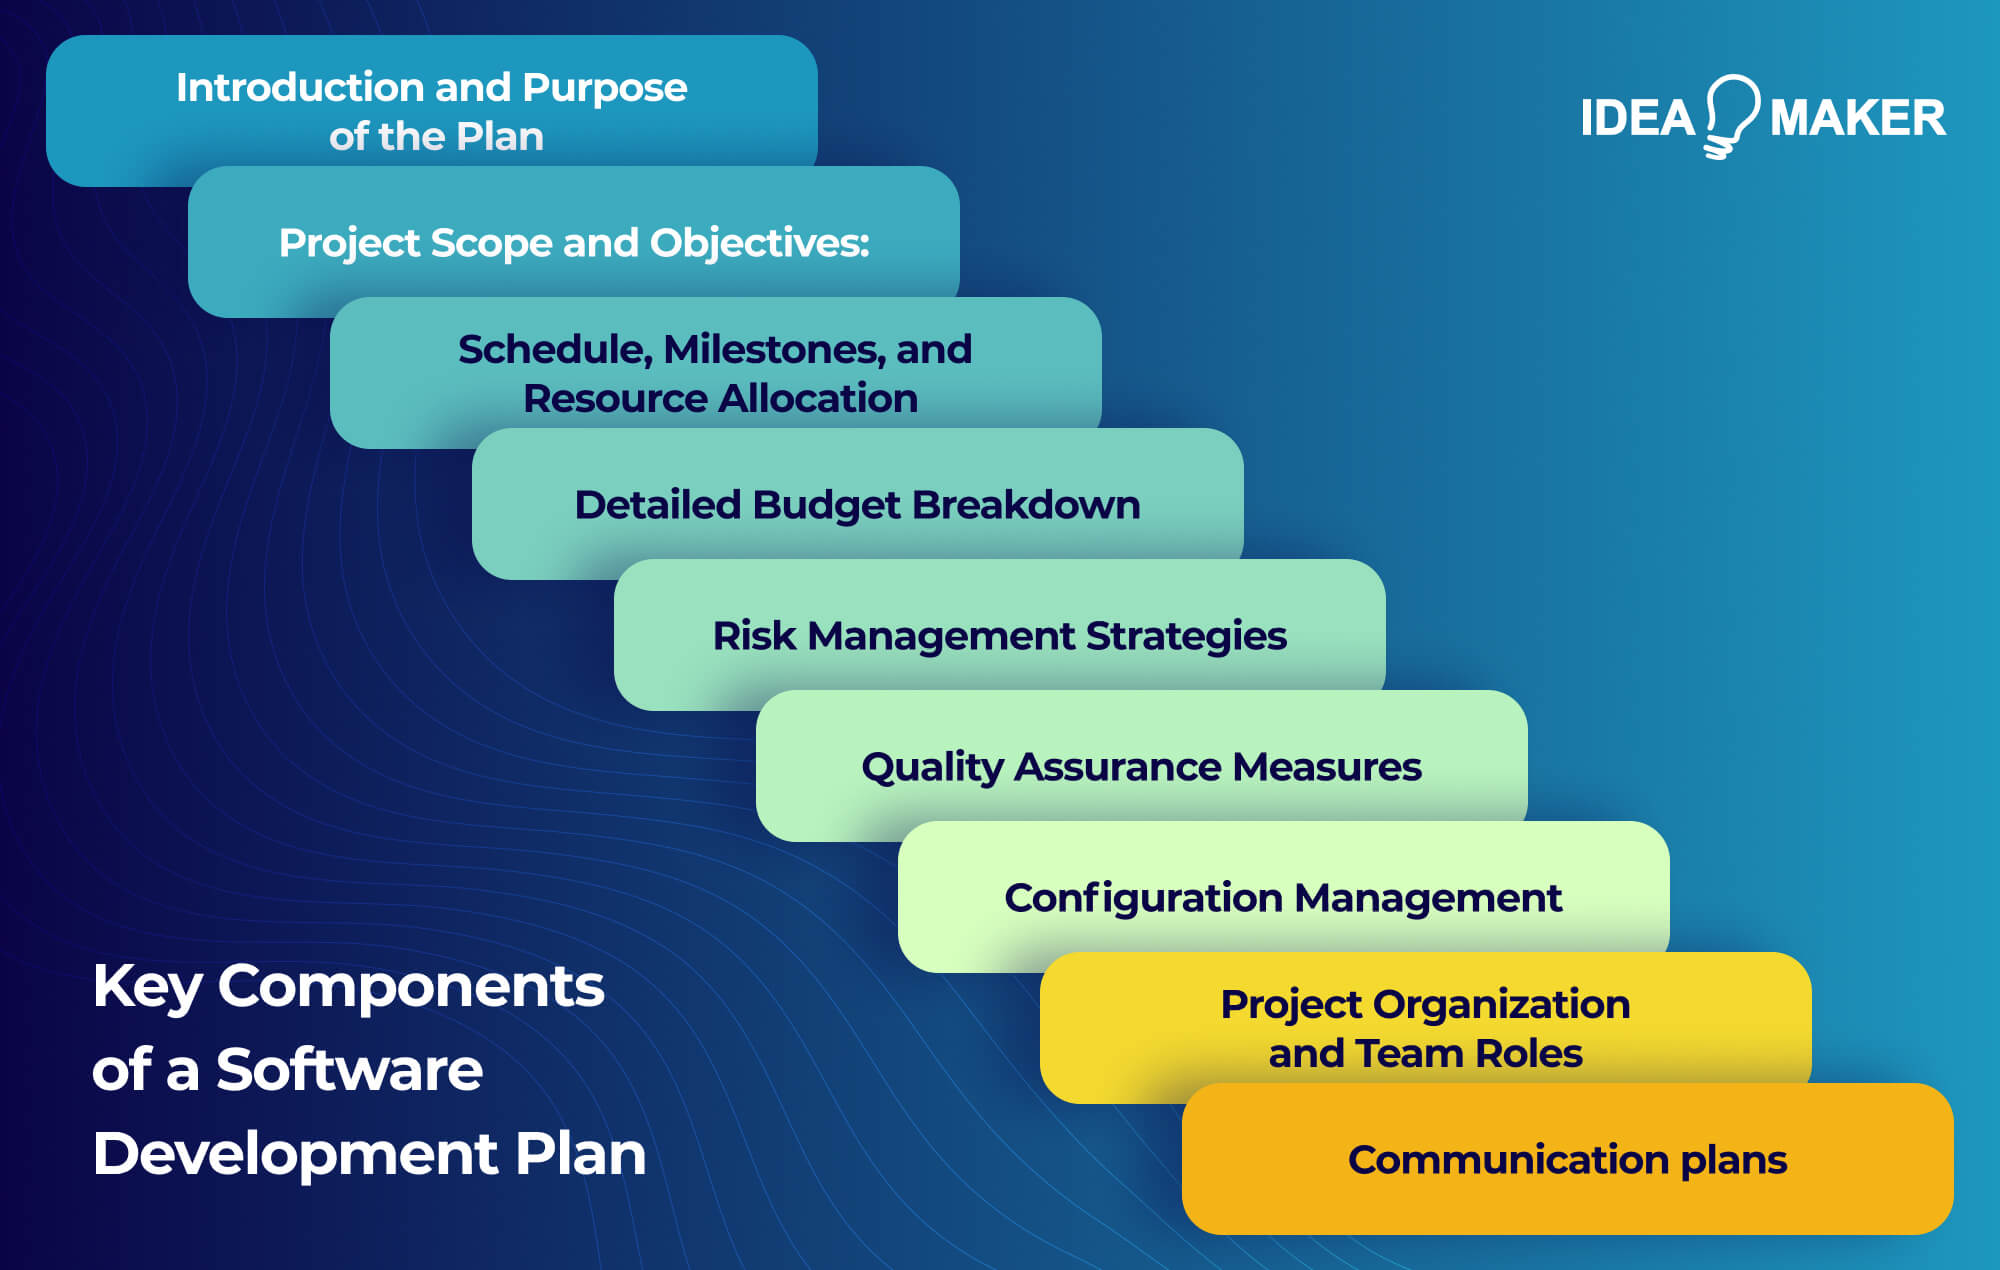 Ideamaker - Key Components of a Software Development Plan